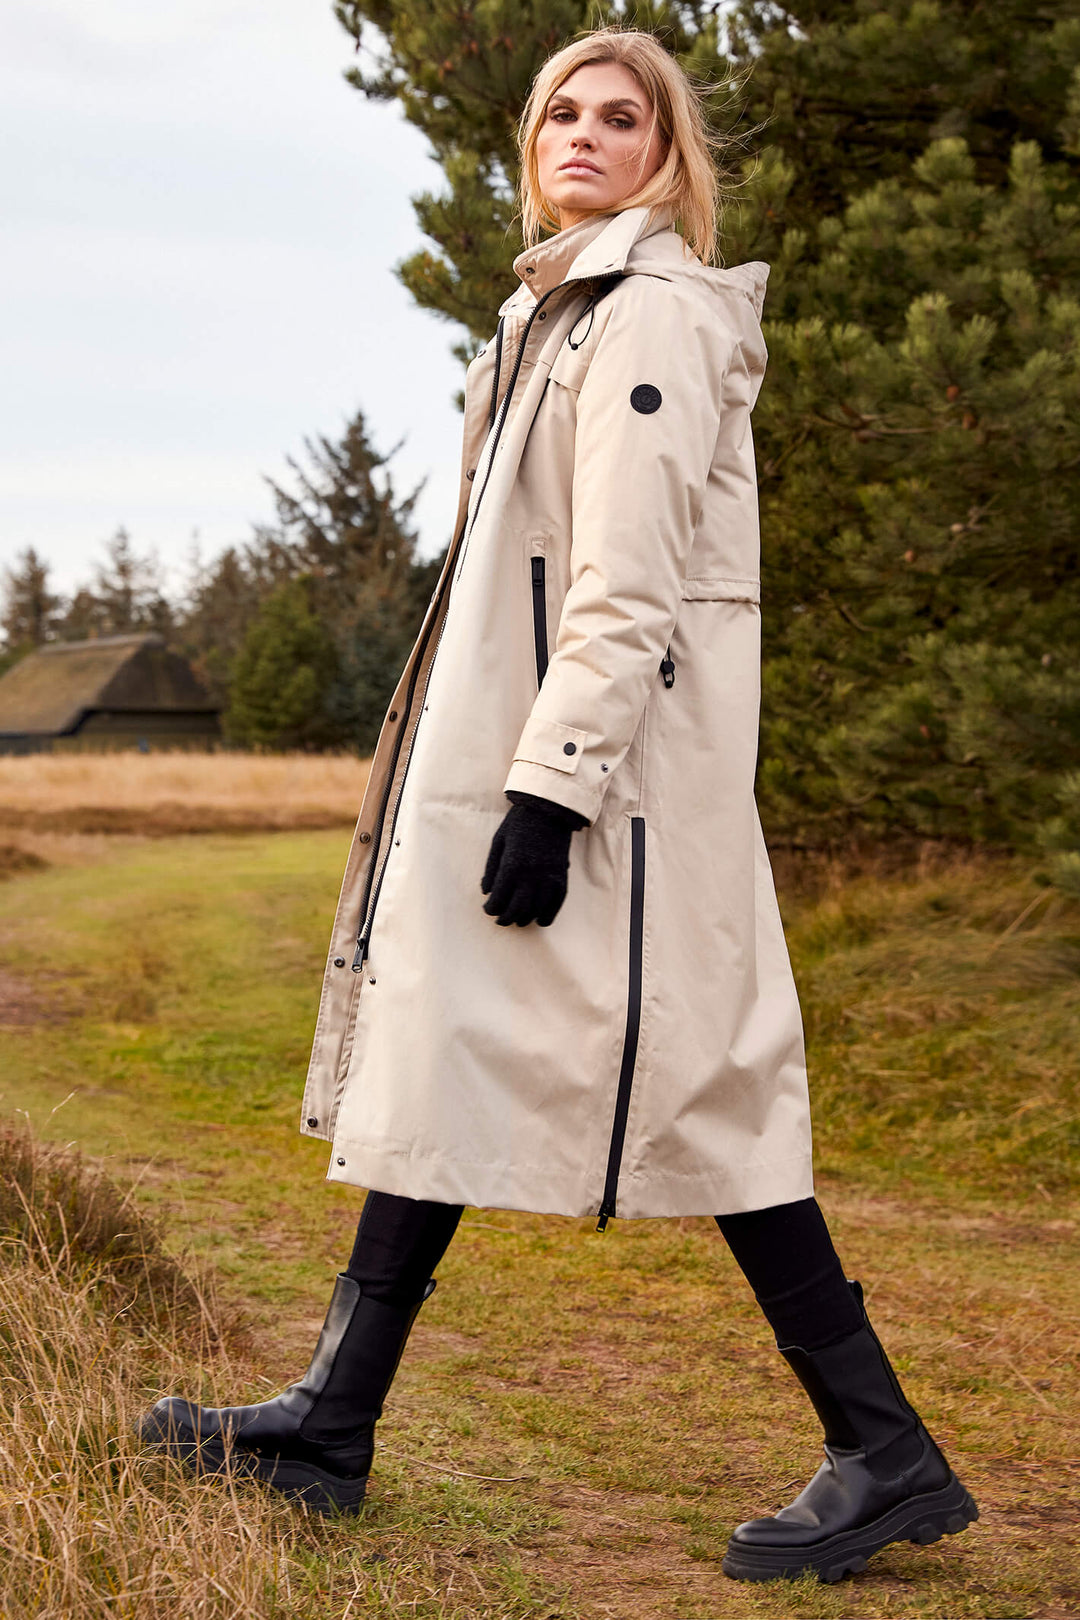 Frandsen 760-292-13 Stone Quilted Layer Long Coat Jacket - Olivia Grace Fashion